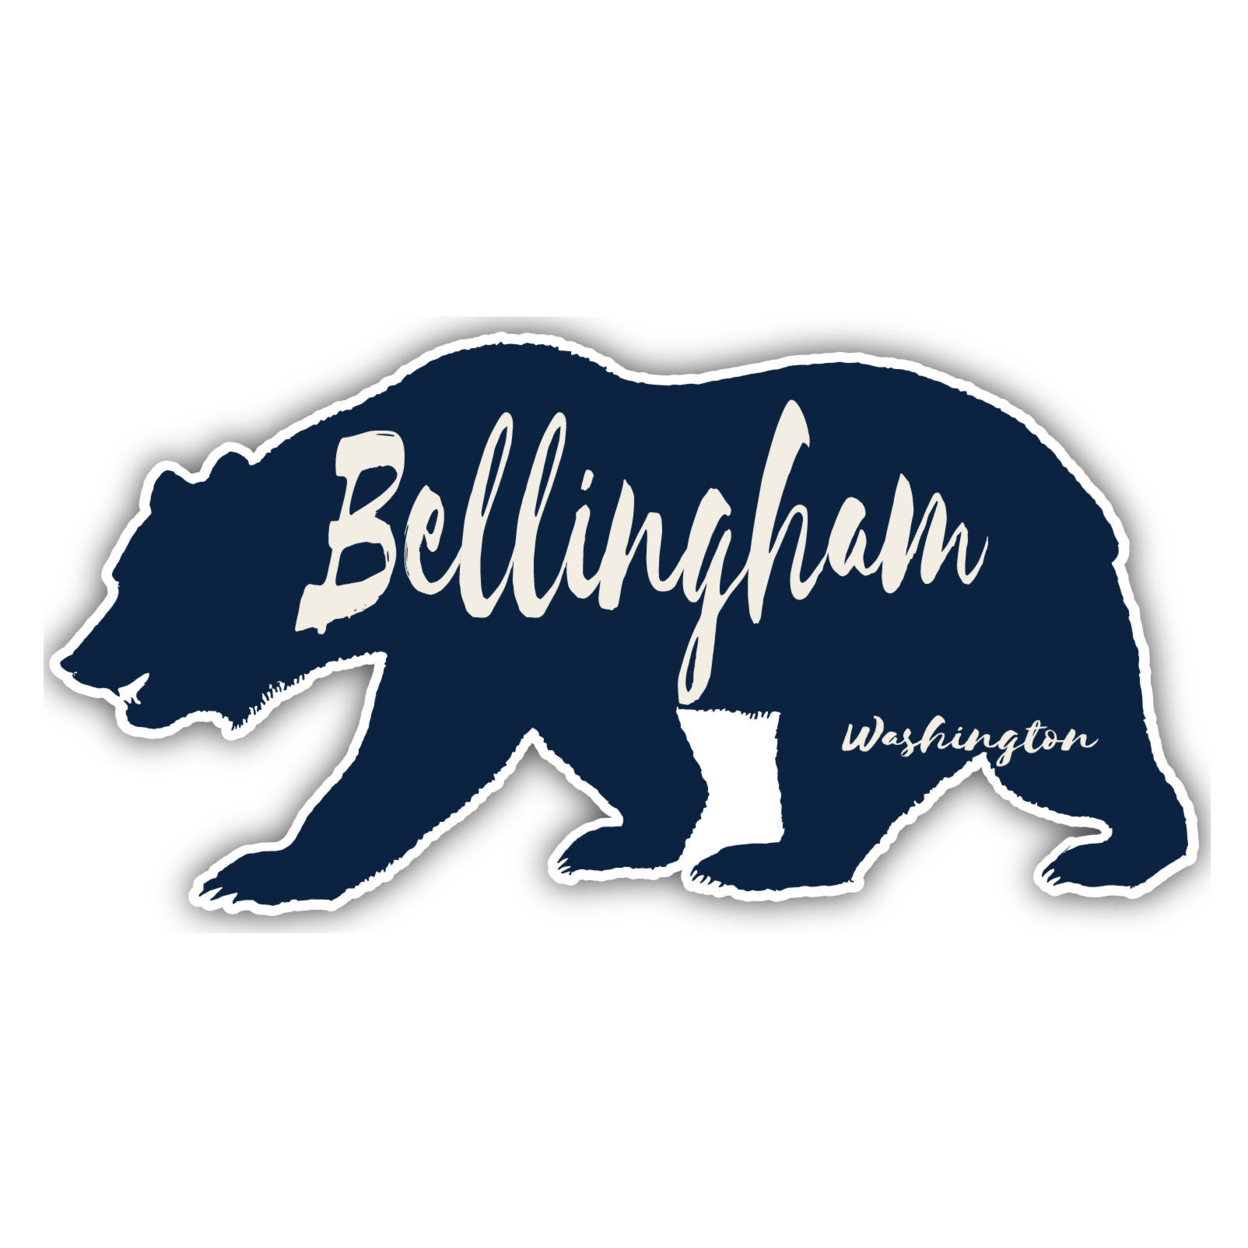 Bellingham Washington Souvenir Decorative Stickers (Choose Theme And Size) - 4-Pack, 12-Inch, Bear